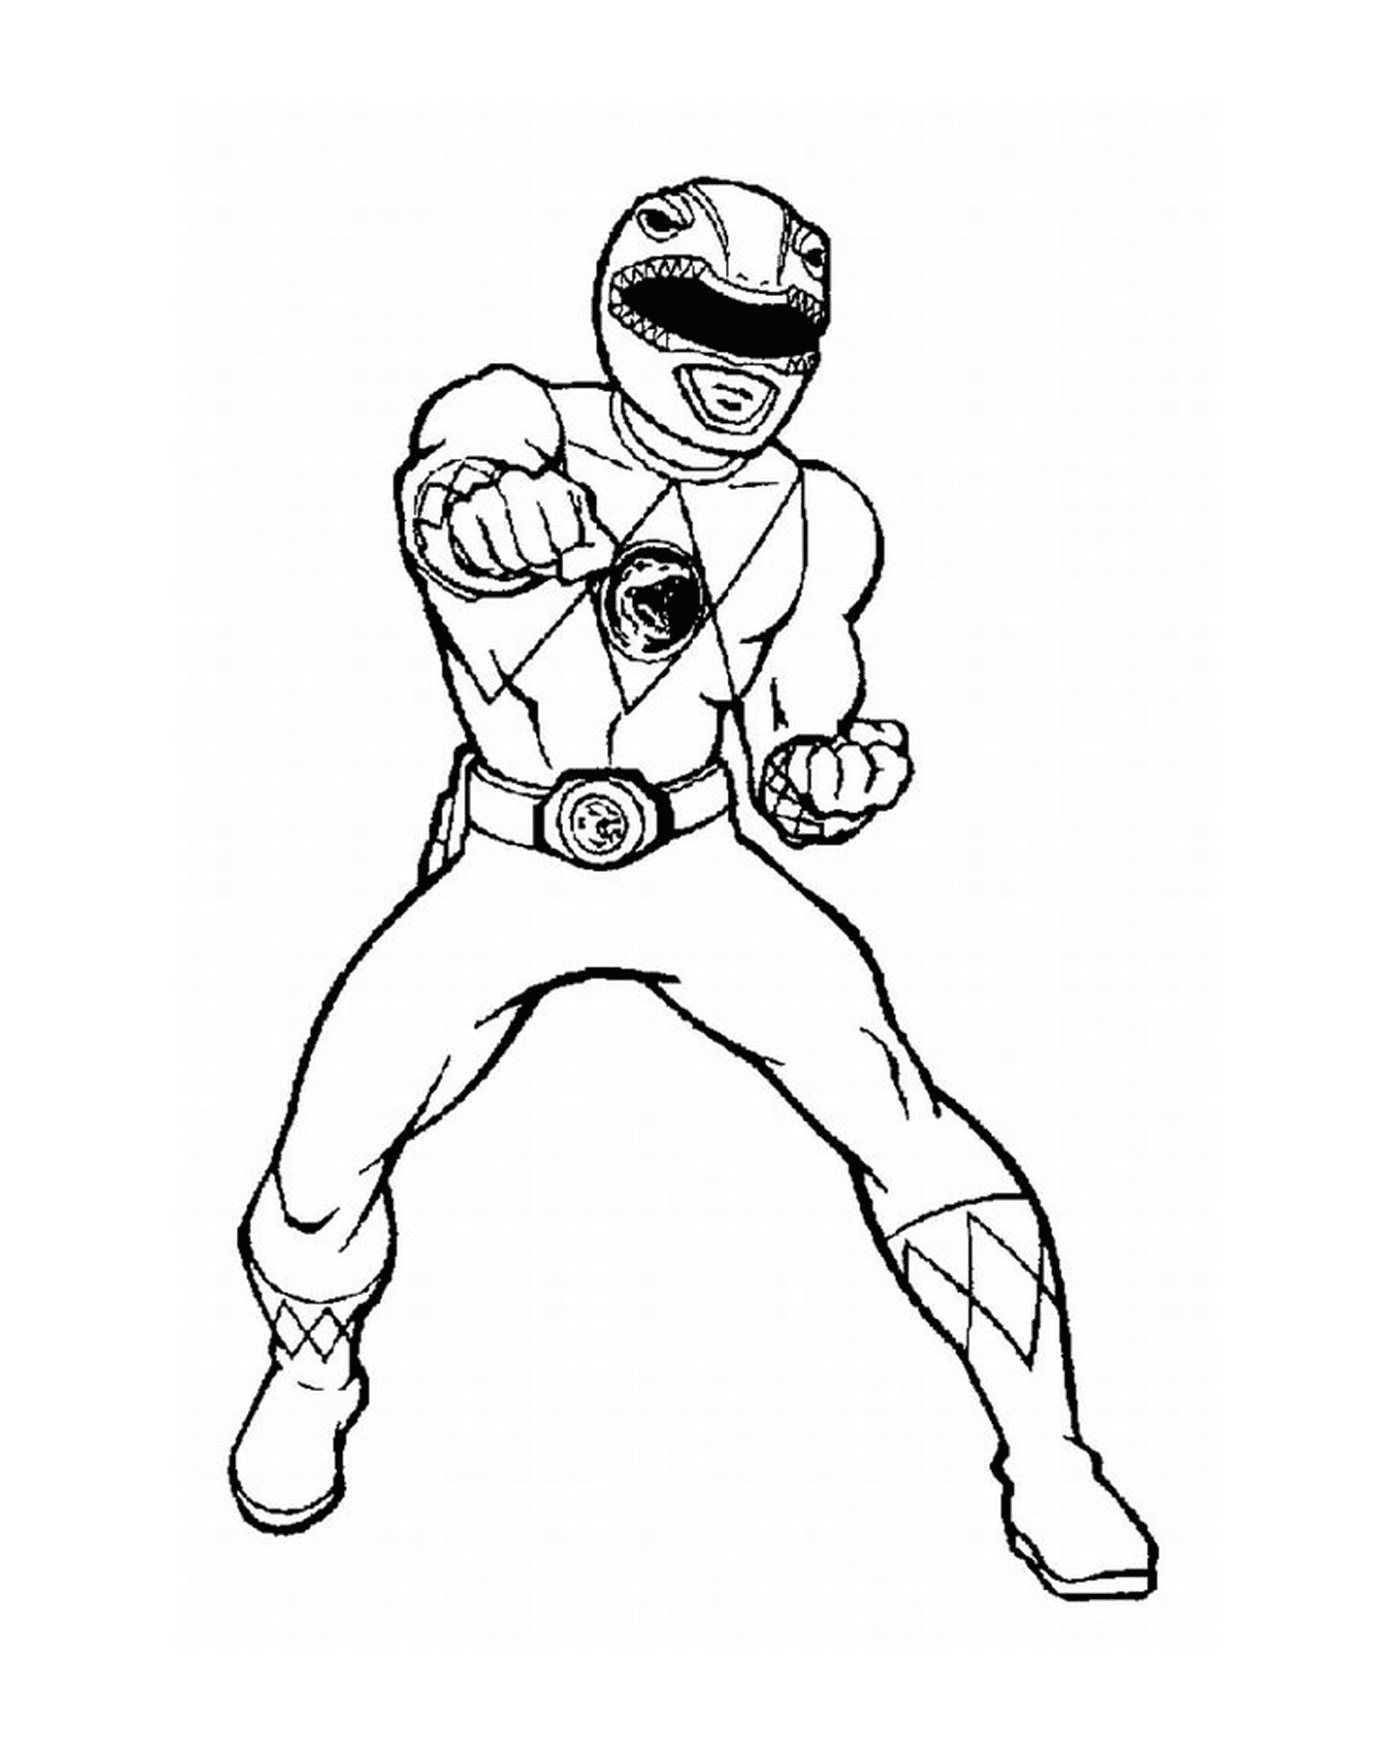  Jungle Fury's Power Ranger practicing karate 